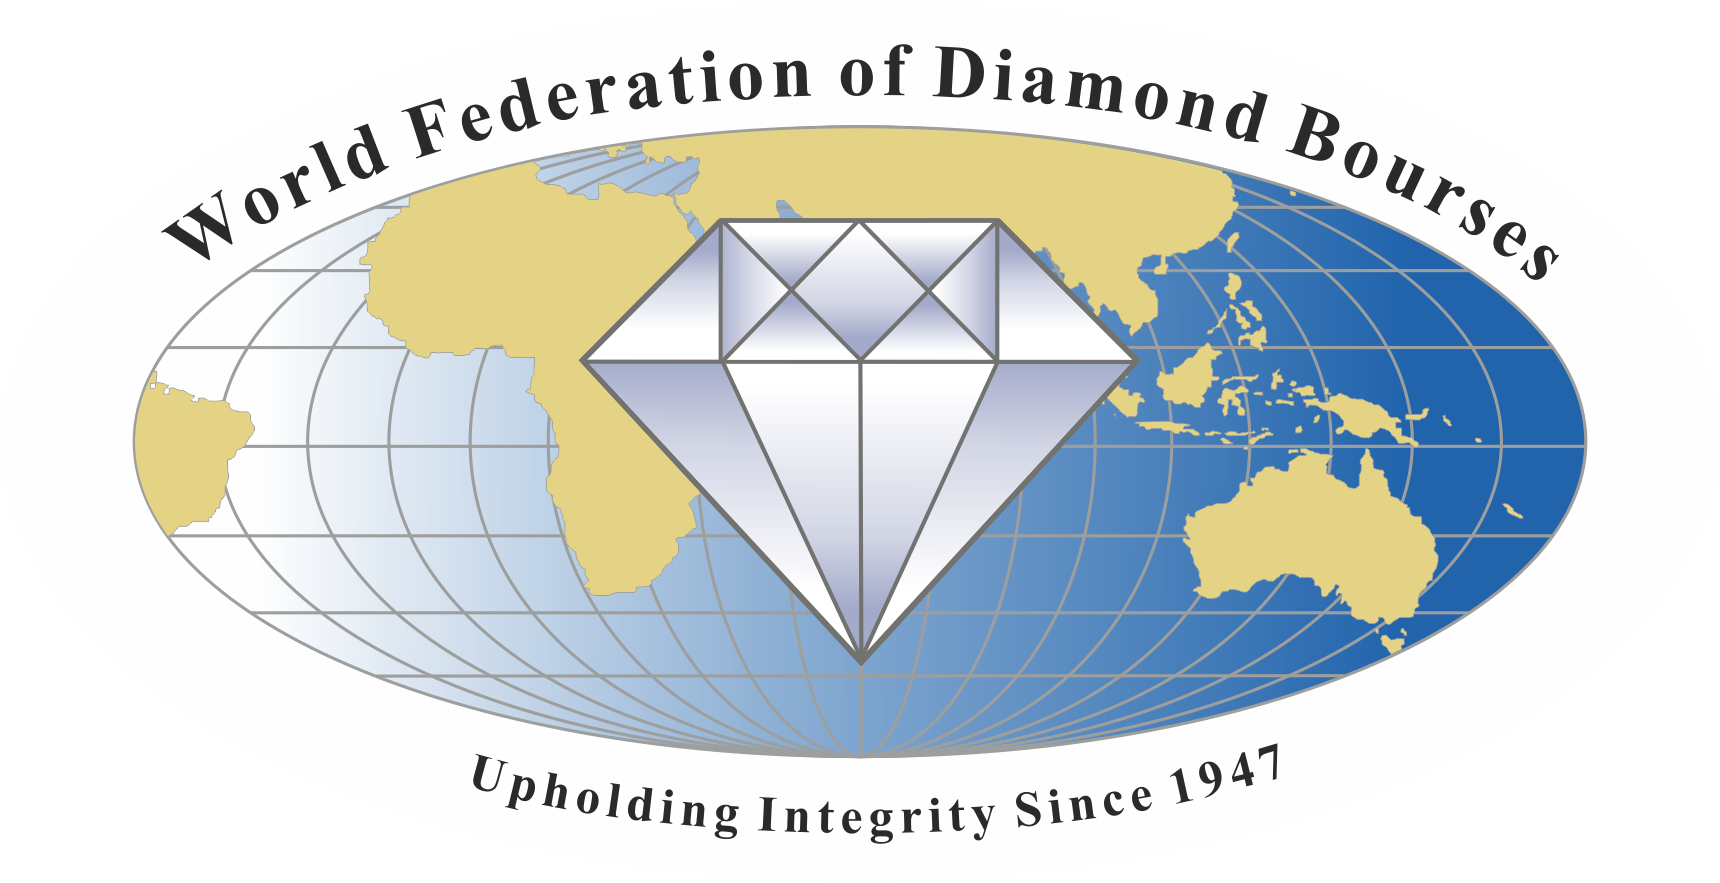 WFDB World Federation of Diamond Bourses Logo